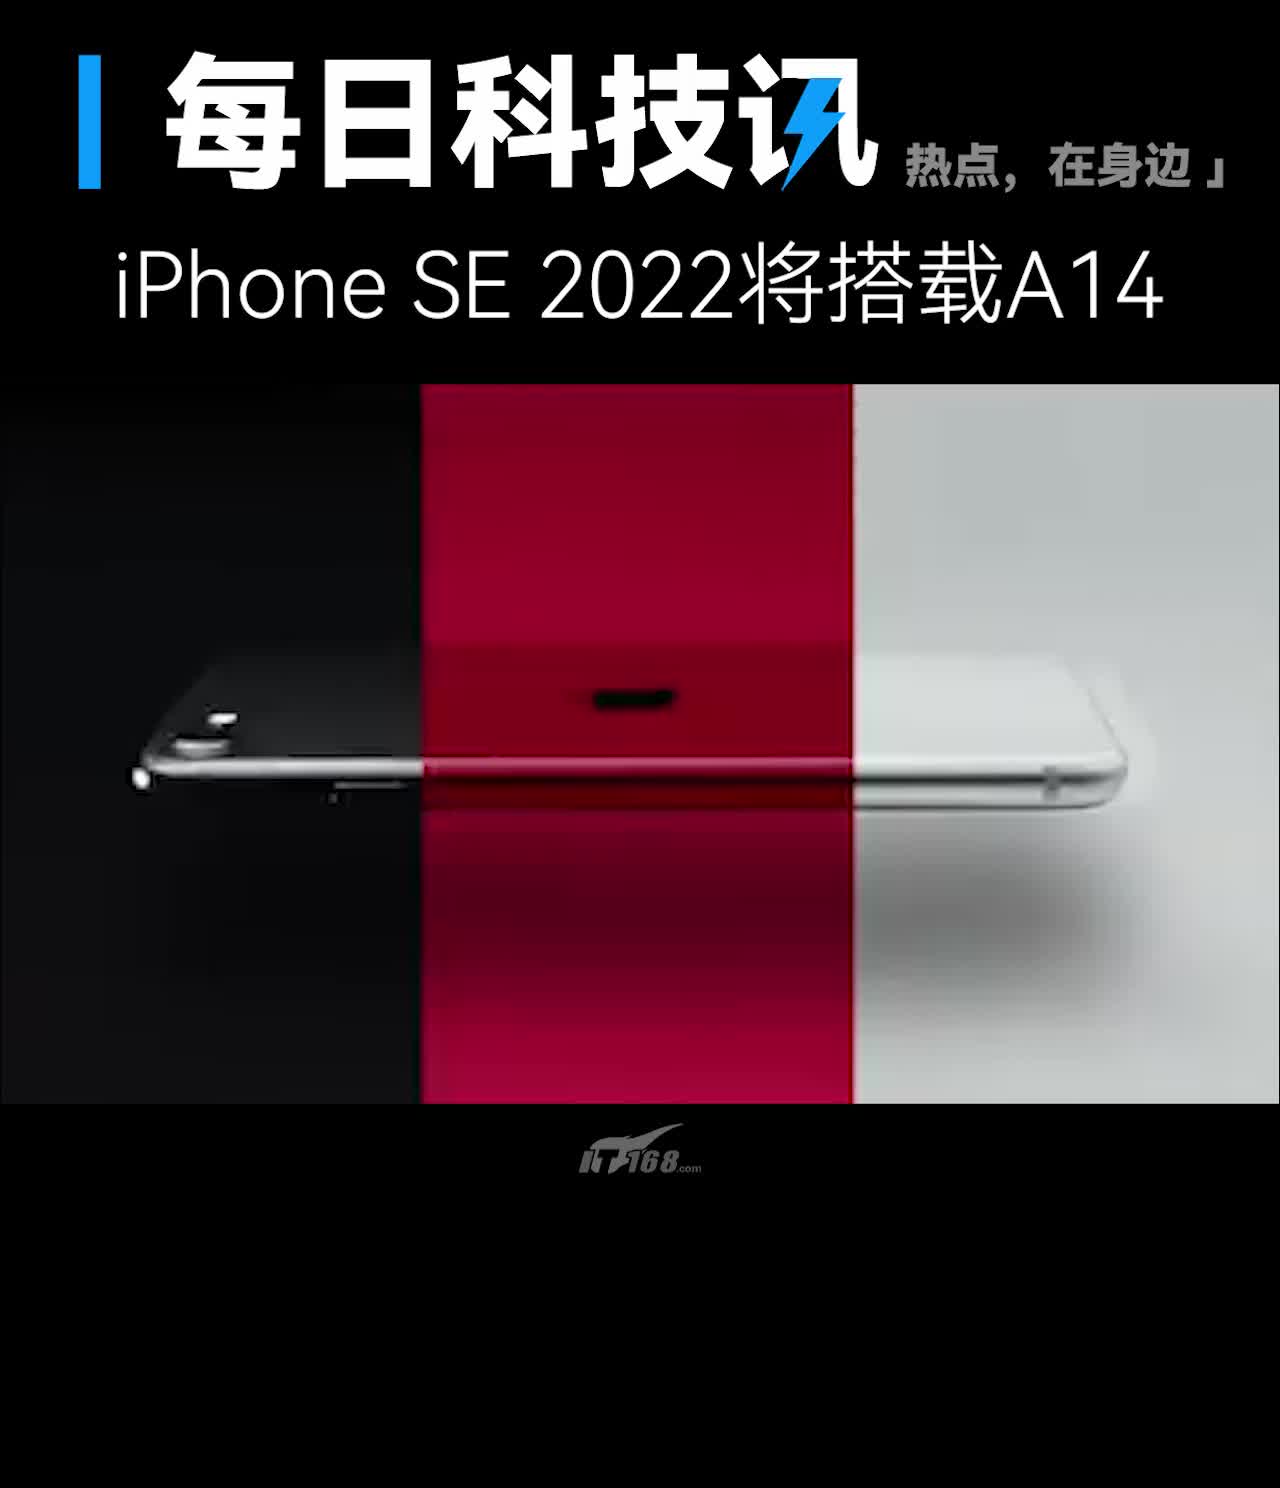 【iPhone SE 2022将搭载A14】